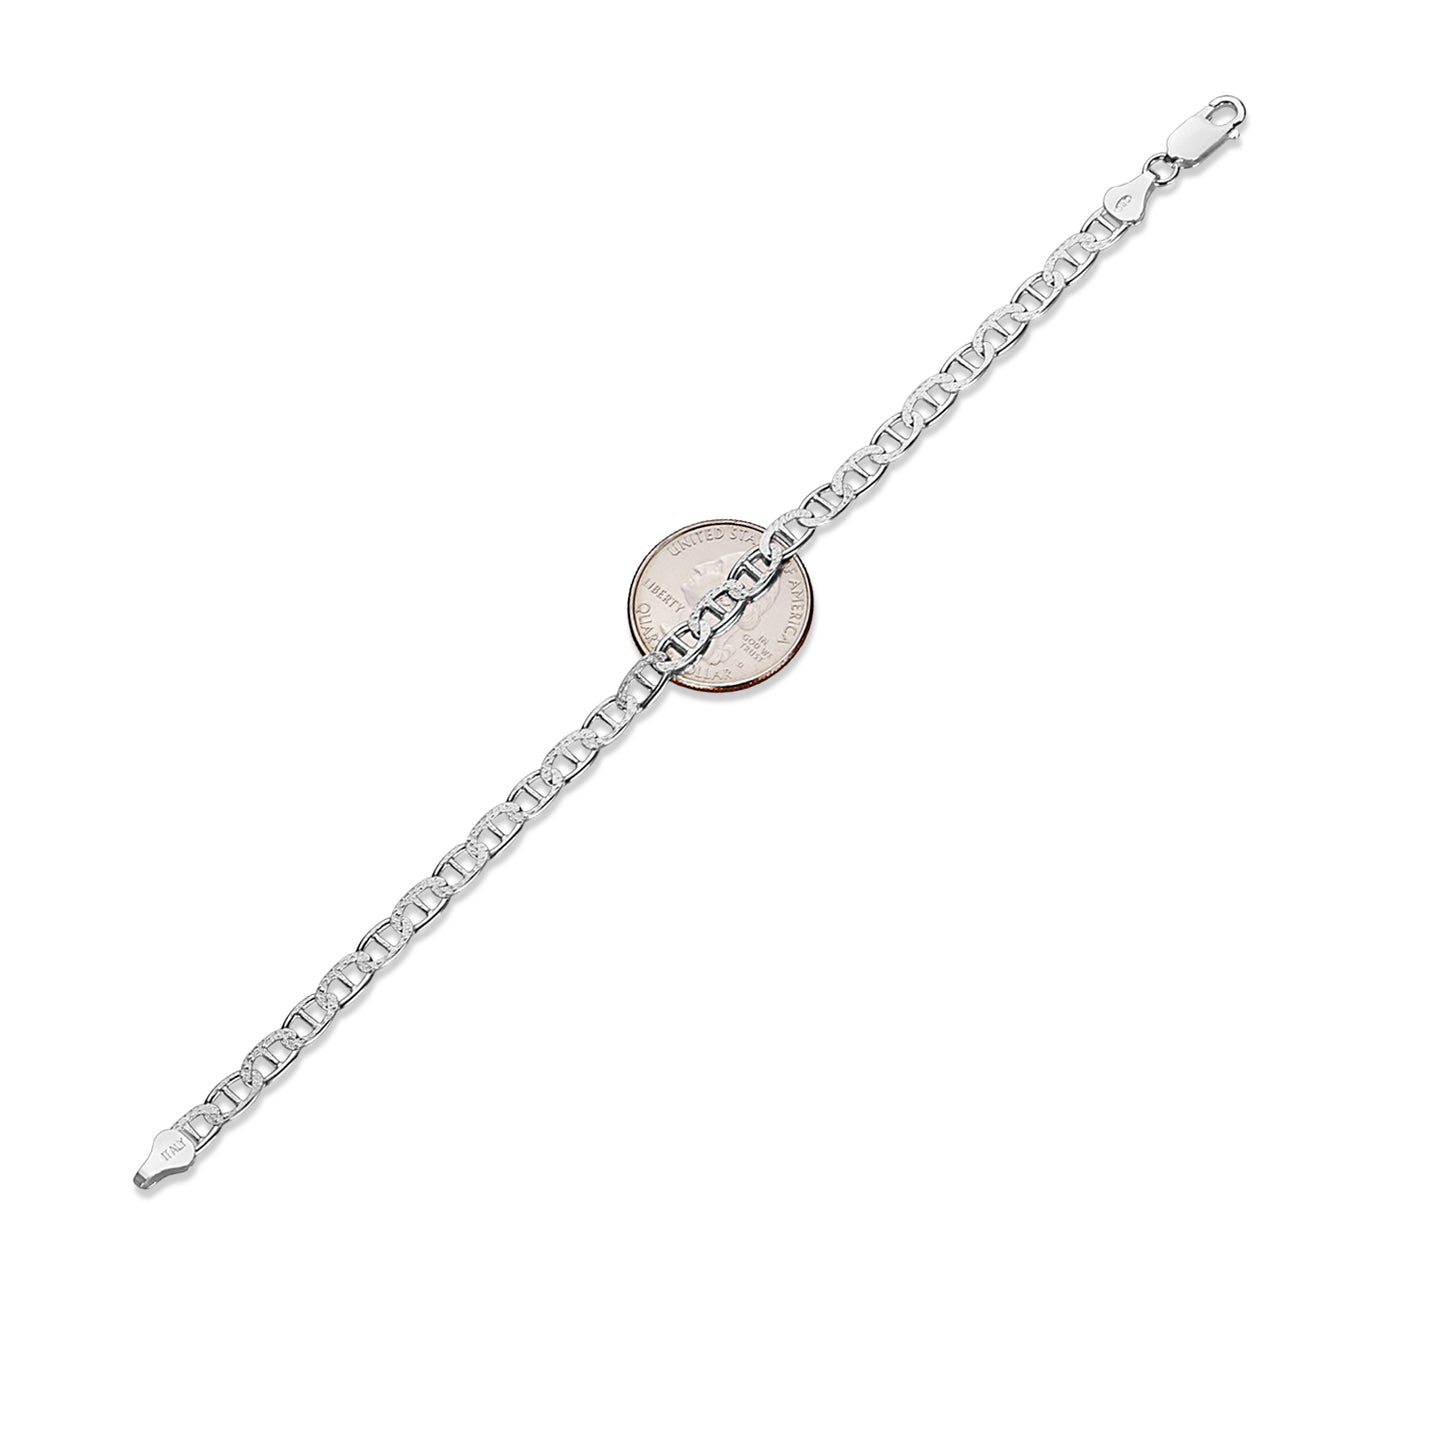 5mm-6mm .925 Sterling Silver Diamond-Cut Mariner Chain Link Bracelet 7-8" Made in Italy (SKU: MARINER-DC-BRACELETS)